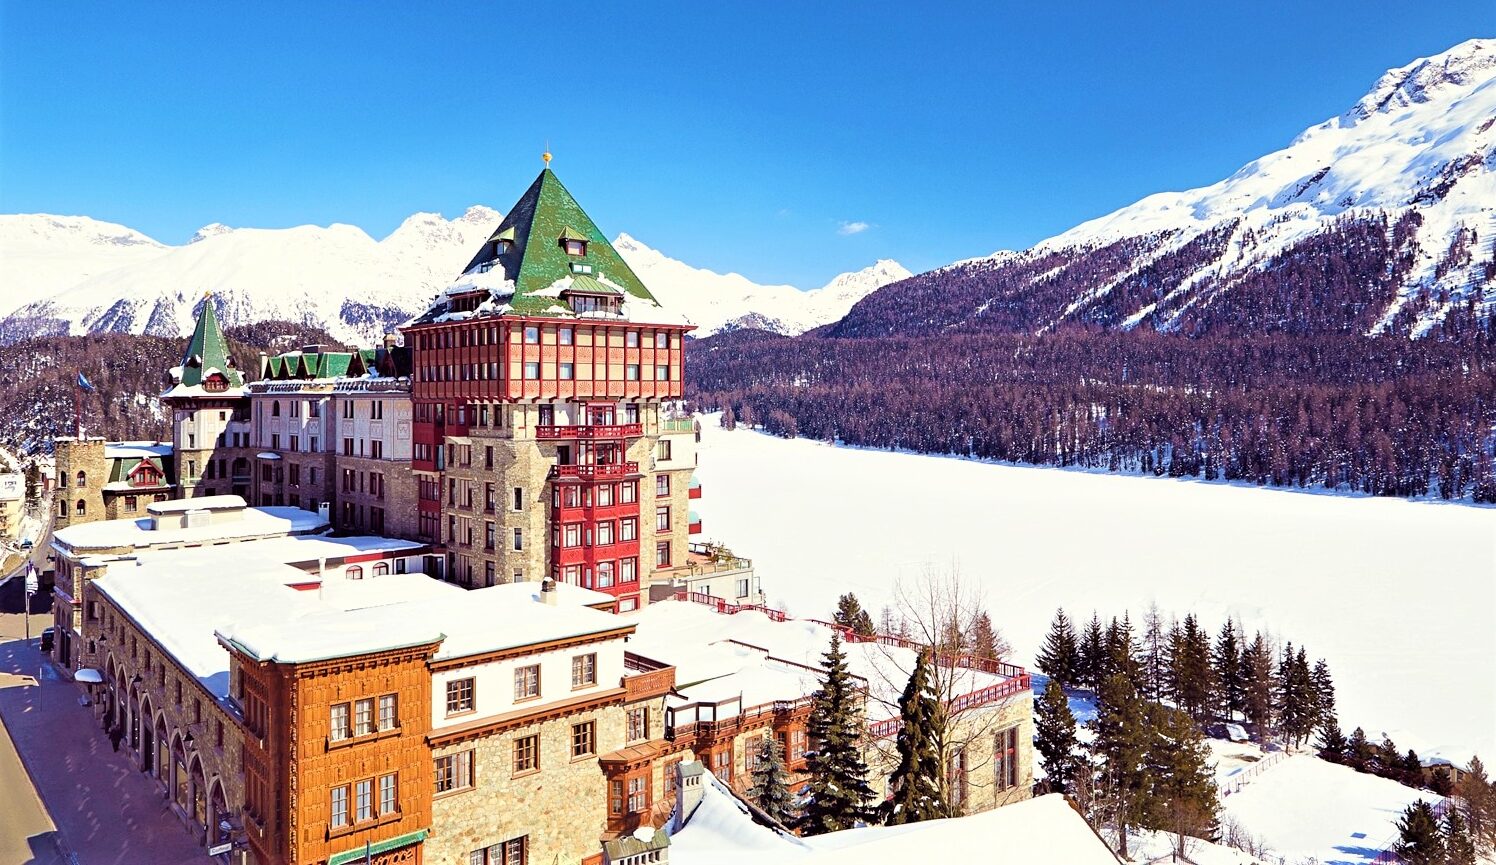 St. Moritz Badrutt’s Palace Hotel